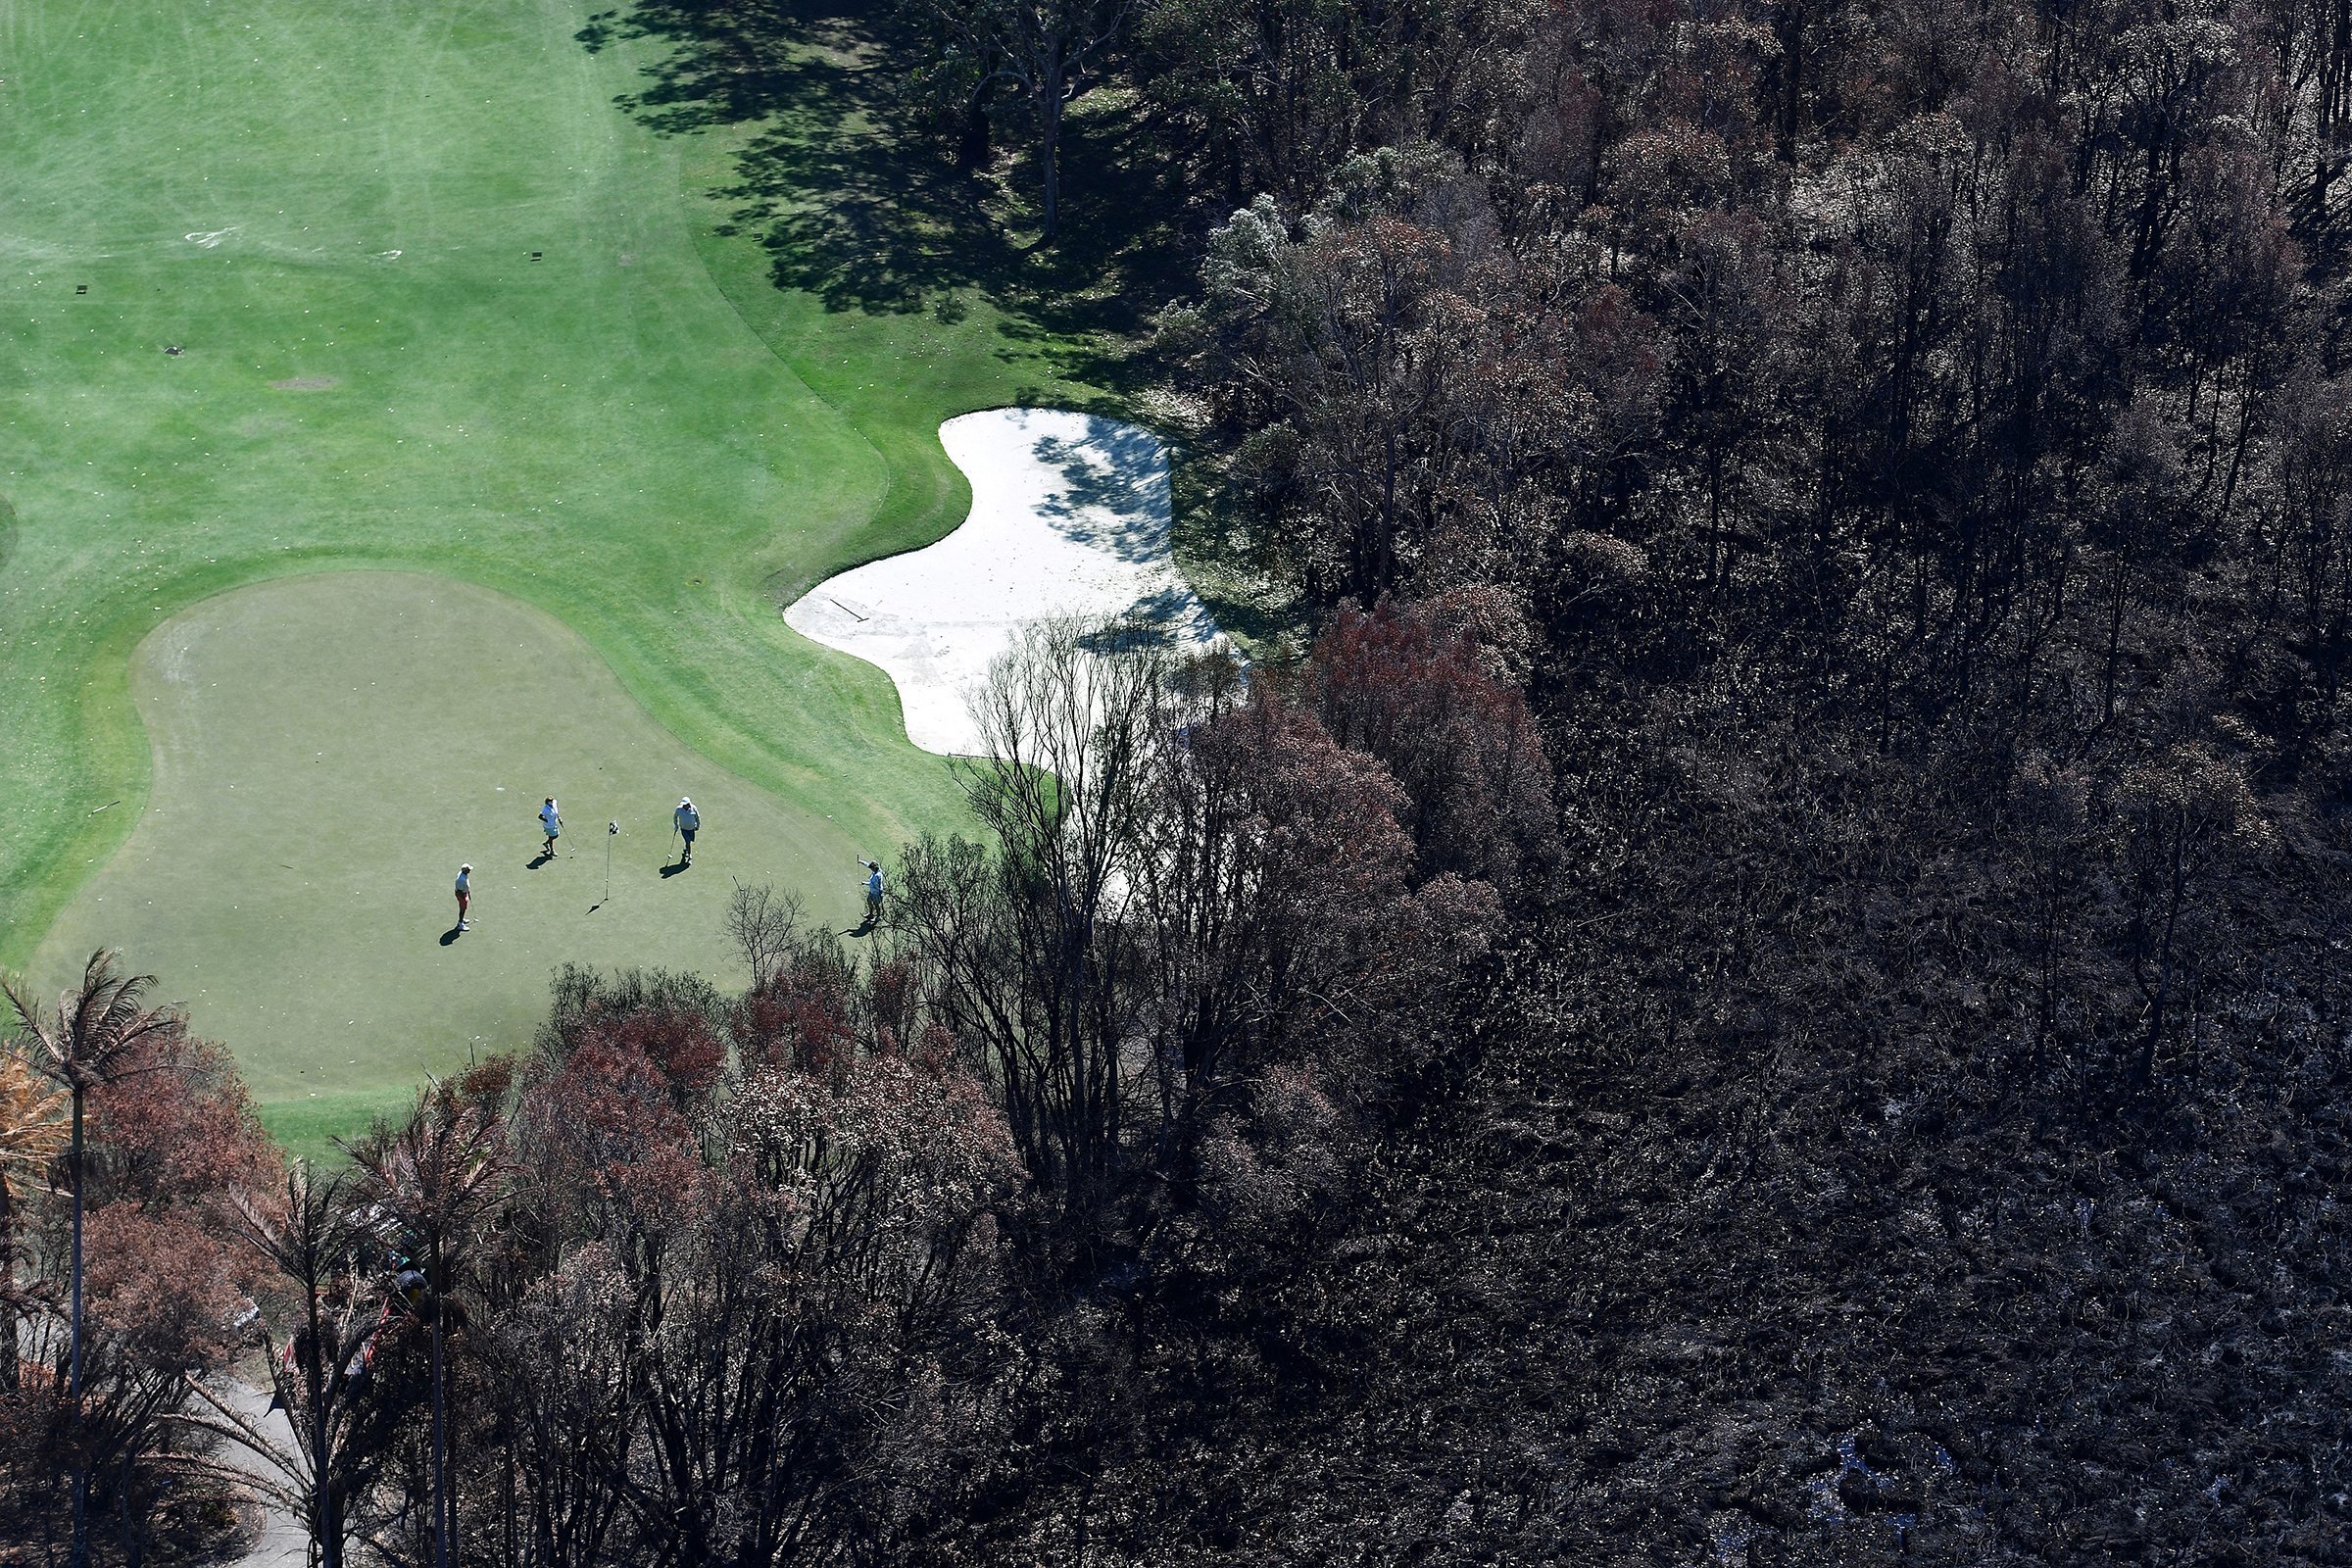 Golfers on the green next to a bushfire-damaged area in Peregian Beach, on the Sunshine Coast, on Sept. 10, 2019. (Dan Peled—EPA-EFE/Shutterstock)